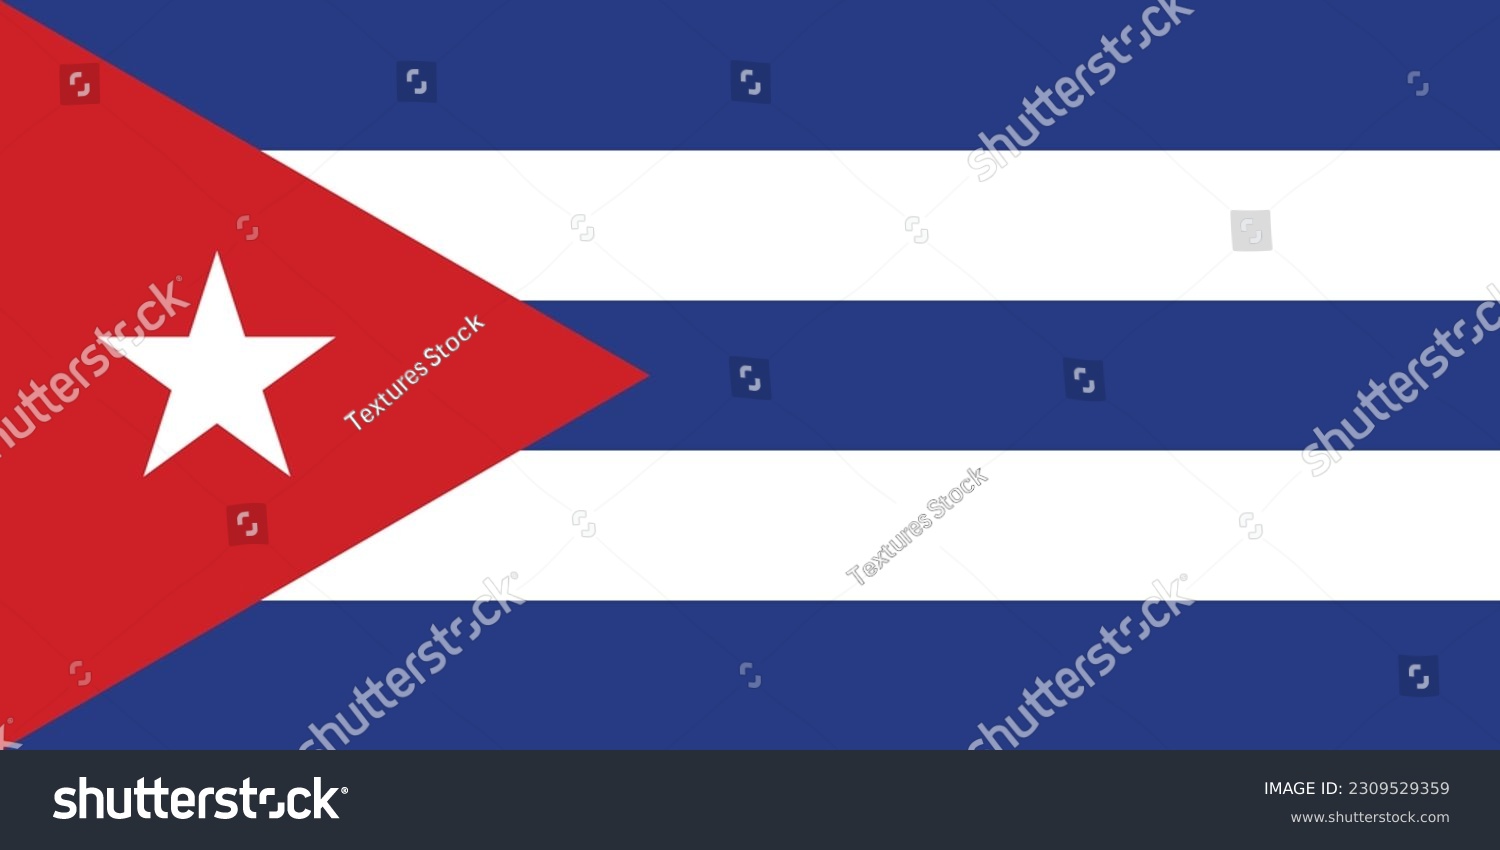 The flag of Cuba. Flag icon. Standard color. Standard size. Rectangular flag. Computer illustration. Digital illustration. Vector illustration. #2309529359